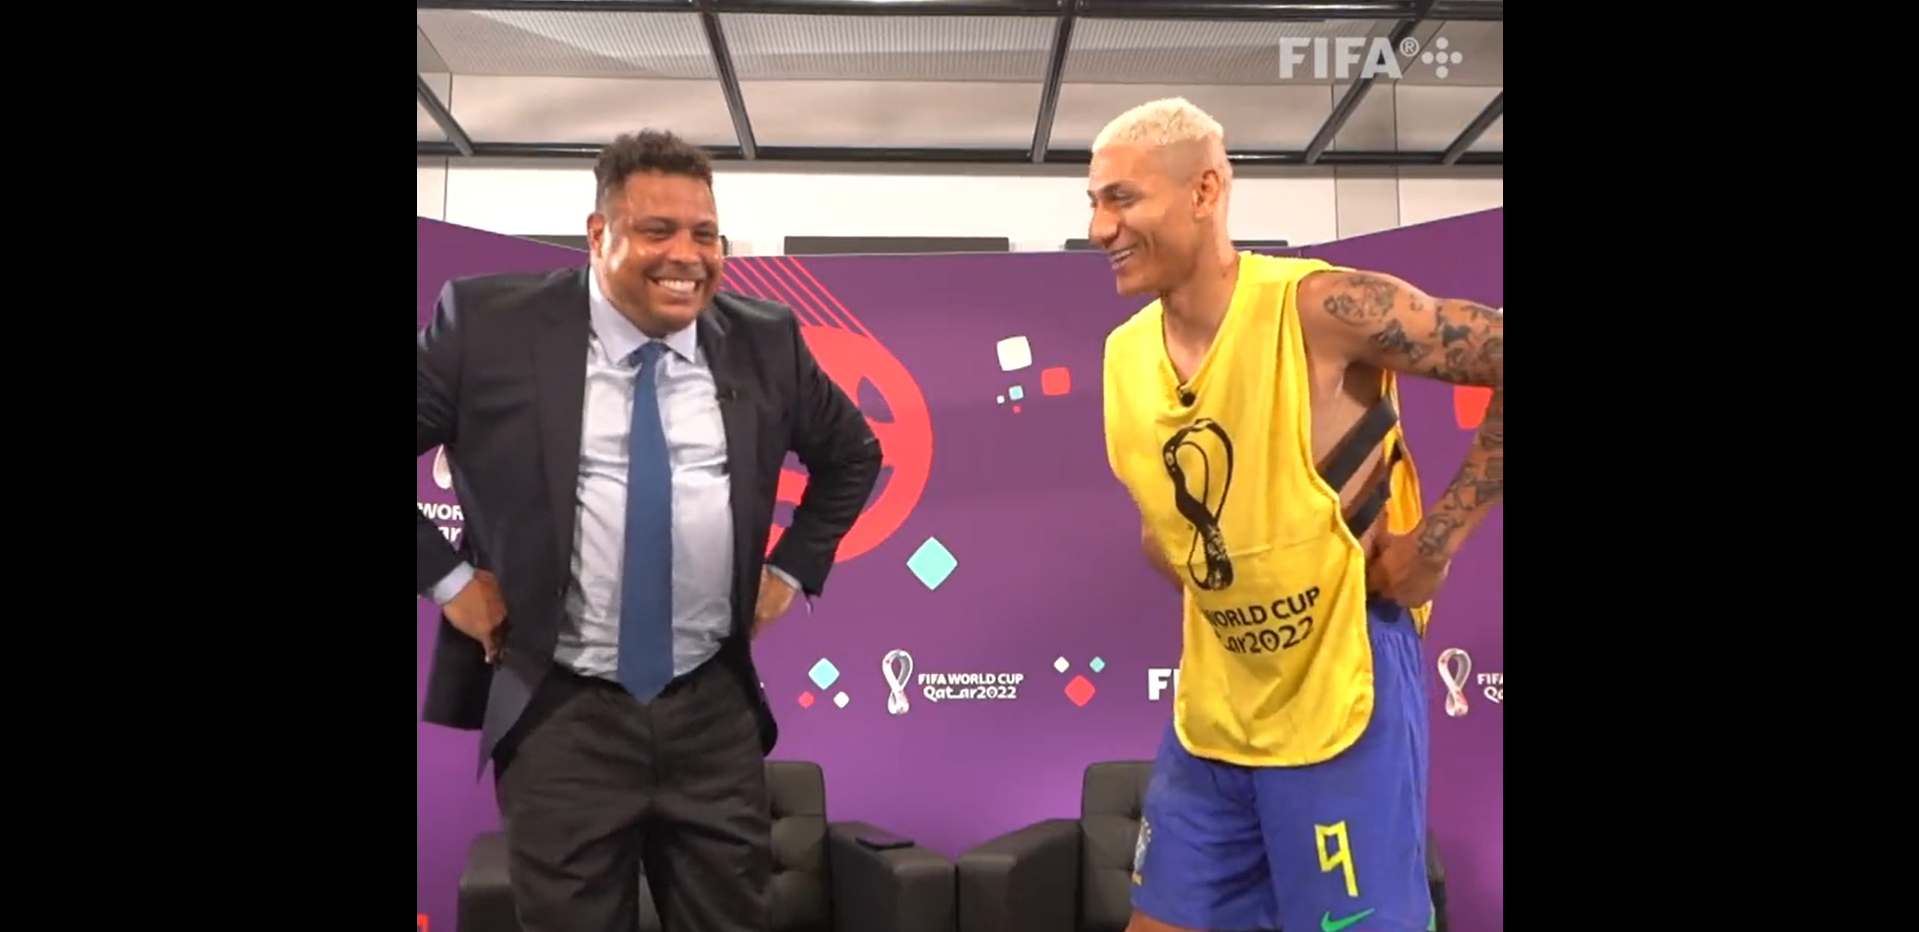 FIFA World Cup Richarlison PAIRS up with Brazil Legend Ronaldo, TEACHES him signature Pigeon Dance Move